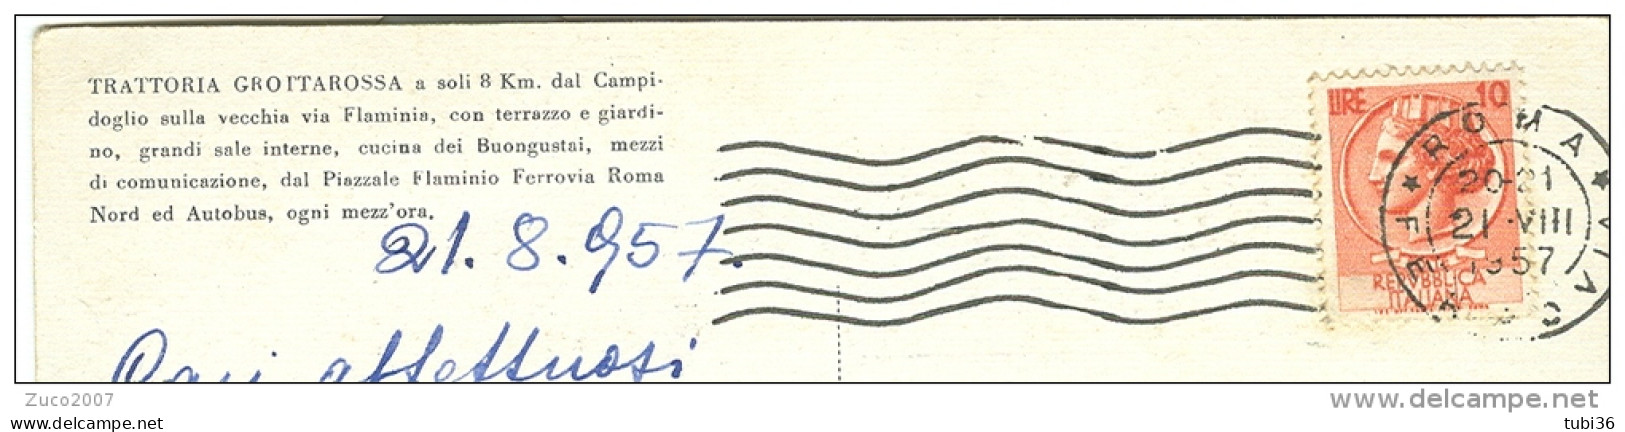 GROTTAROSSA TRATTORIA , ROMA,  5 VEDUTE, B/N VIAGGIATA  1957, ANIMATA, - Bar, Alberghi & Ristoranti